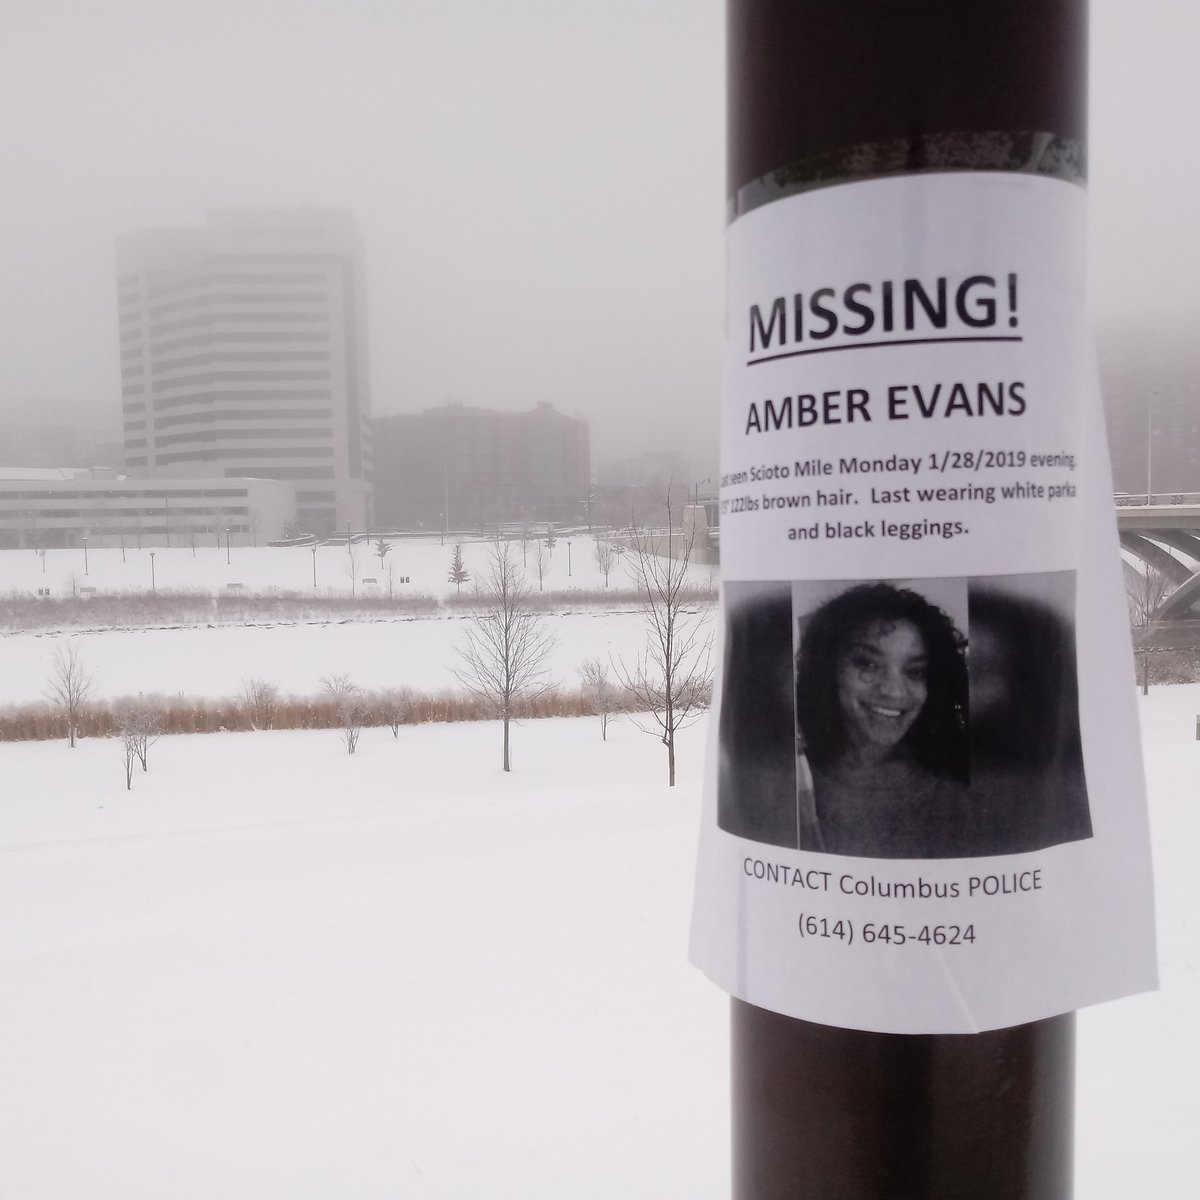 #Search4Amber #AmberEvans #AsSeenInColumbus #MissingPerson #CommunityActivist #Columbus #Ohio